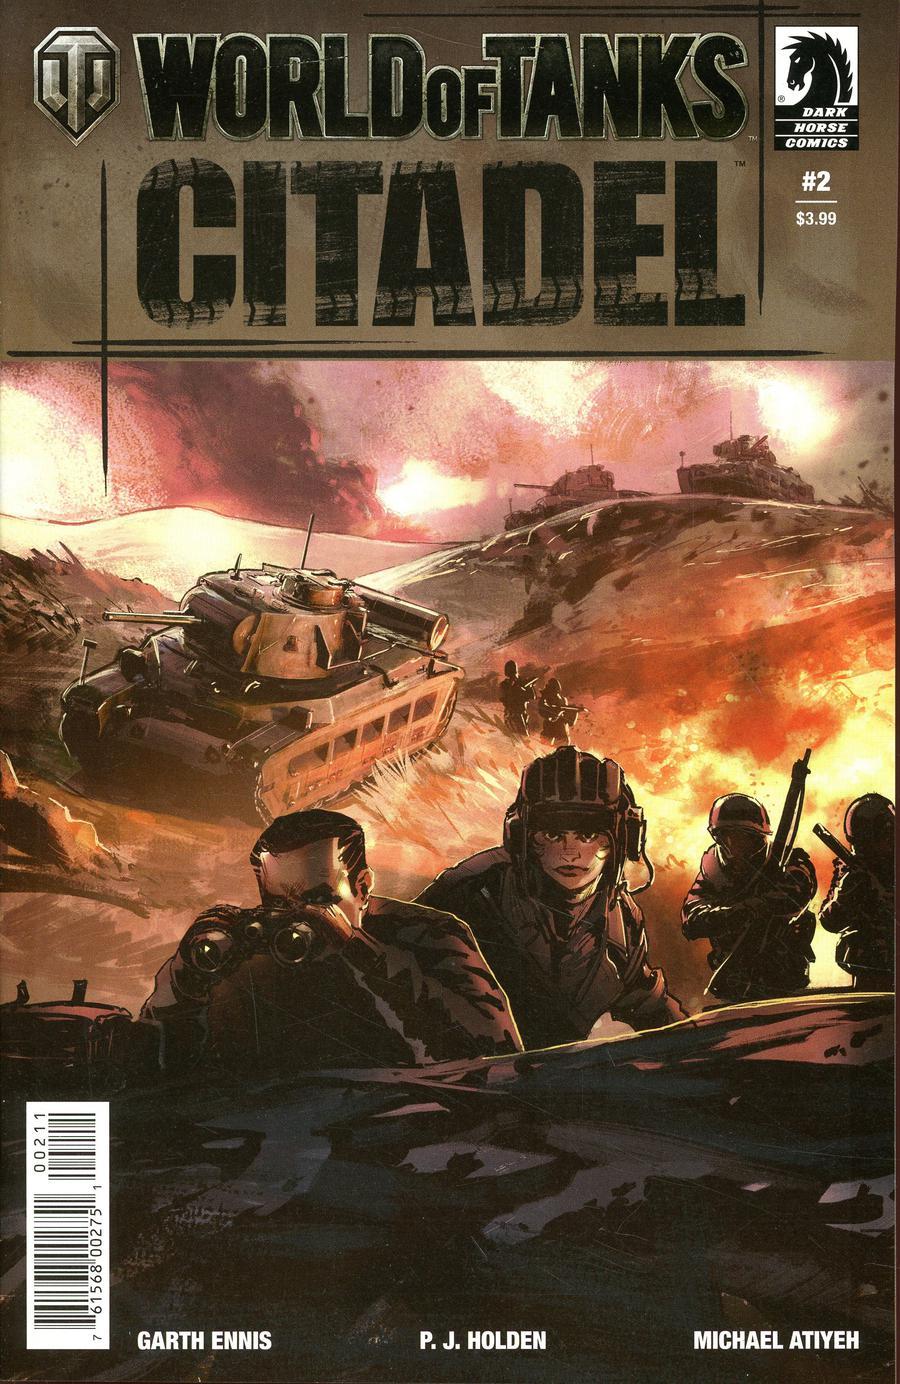 World Of Tanks Citadel Vol. 1 #2